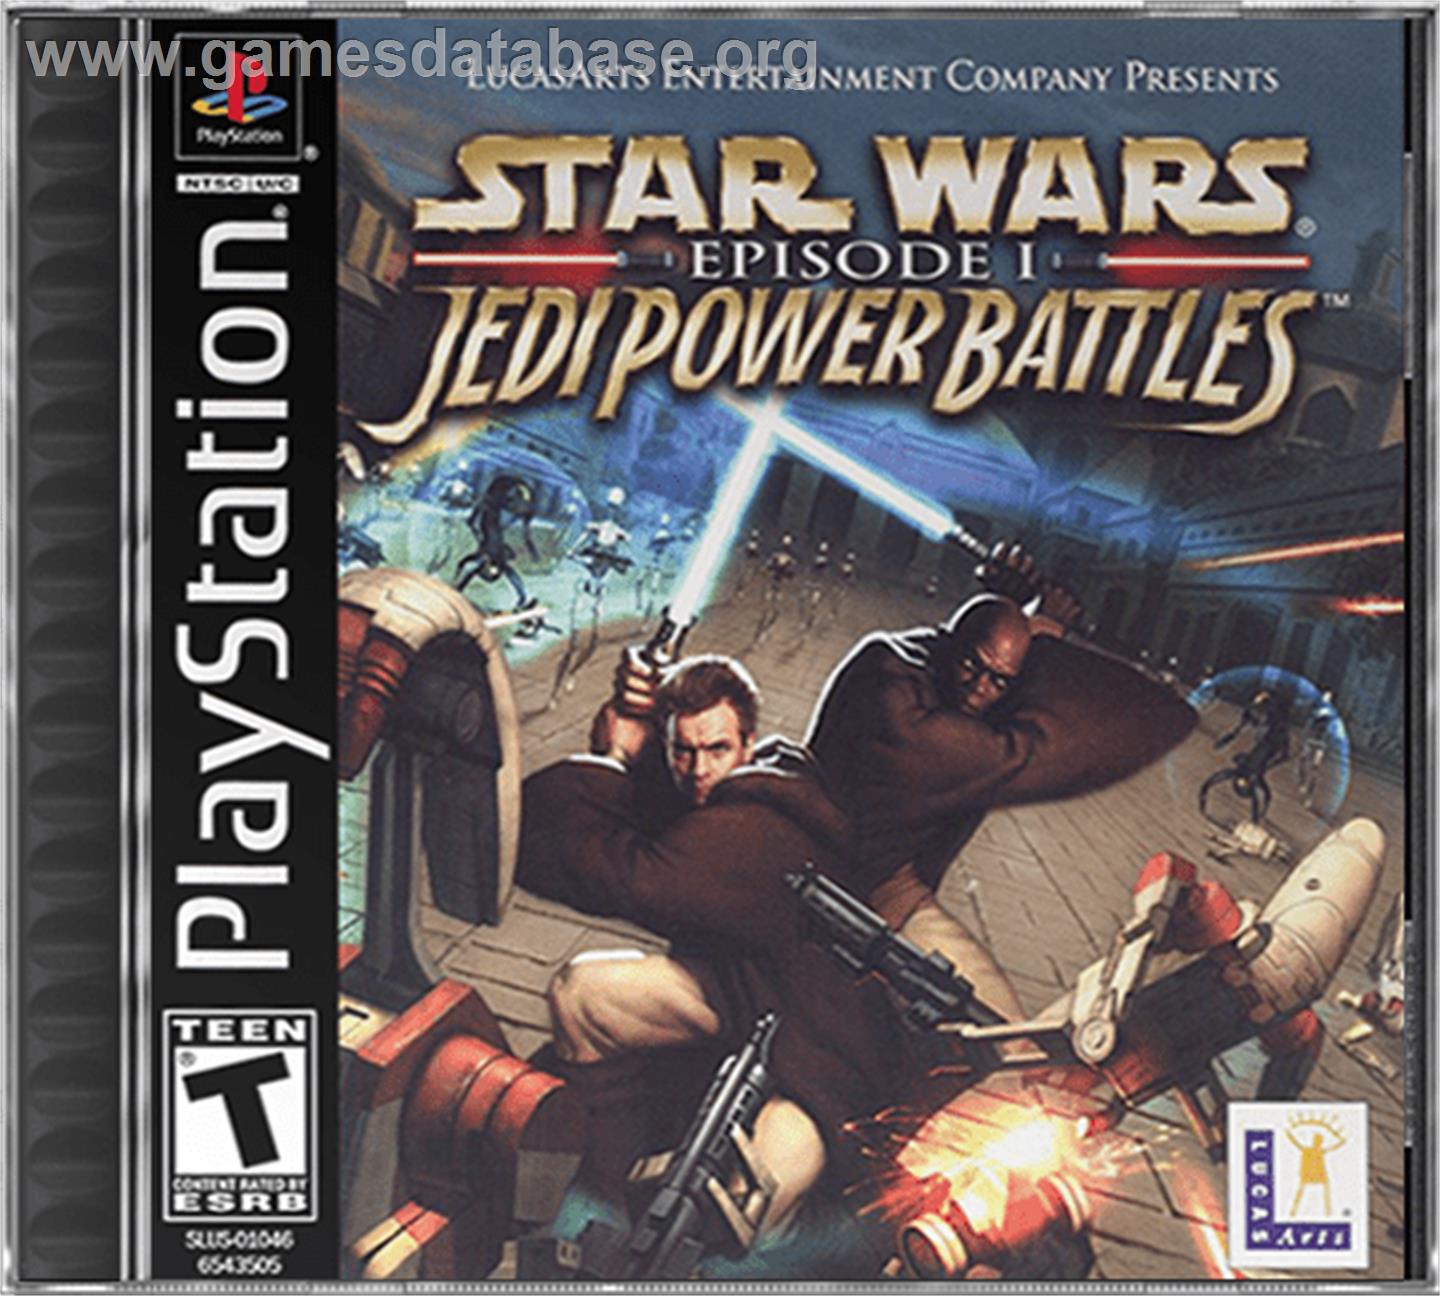 Star Wars: Episode I - Jedi Power Battles - Sony Playstation - Artwork - Box